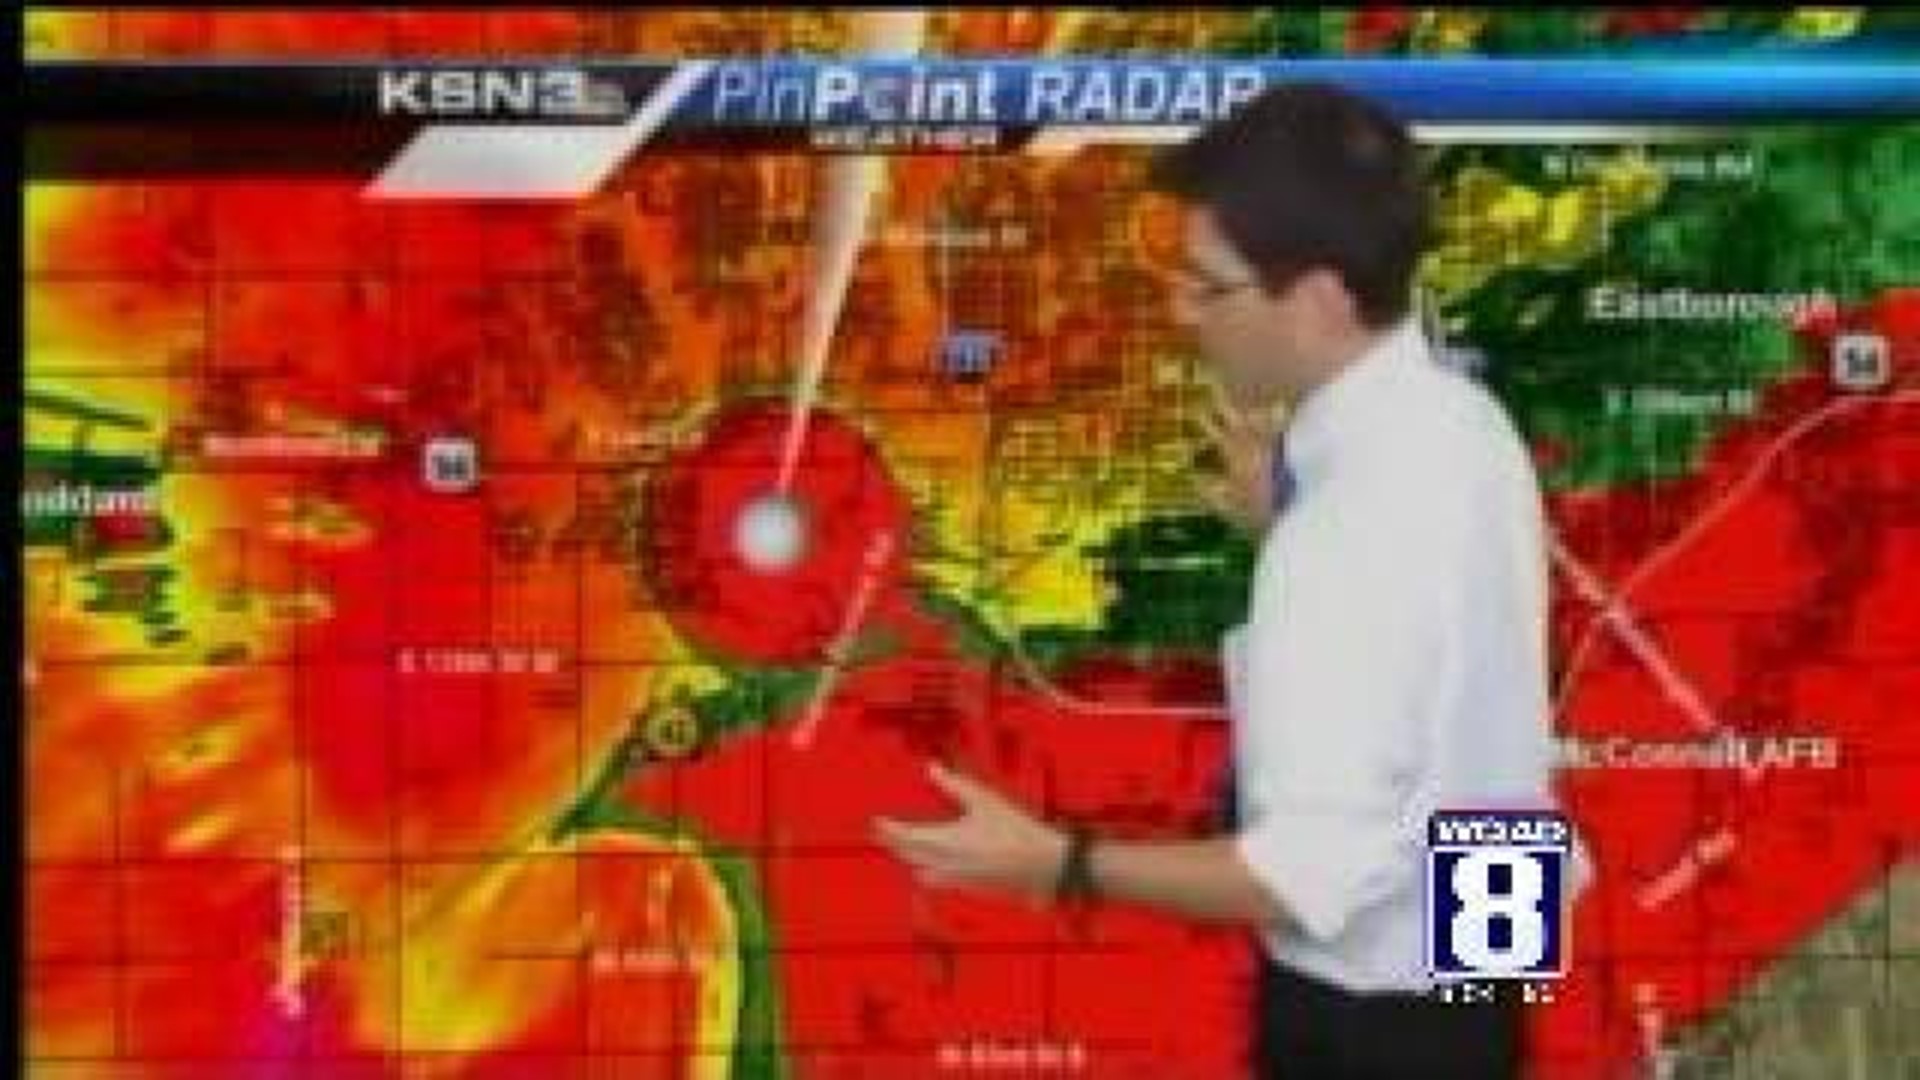 News Crew in Wichita takes cover